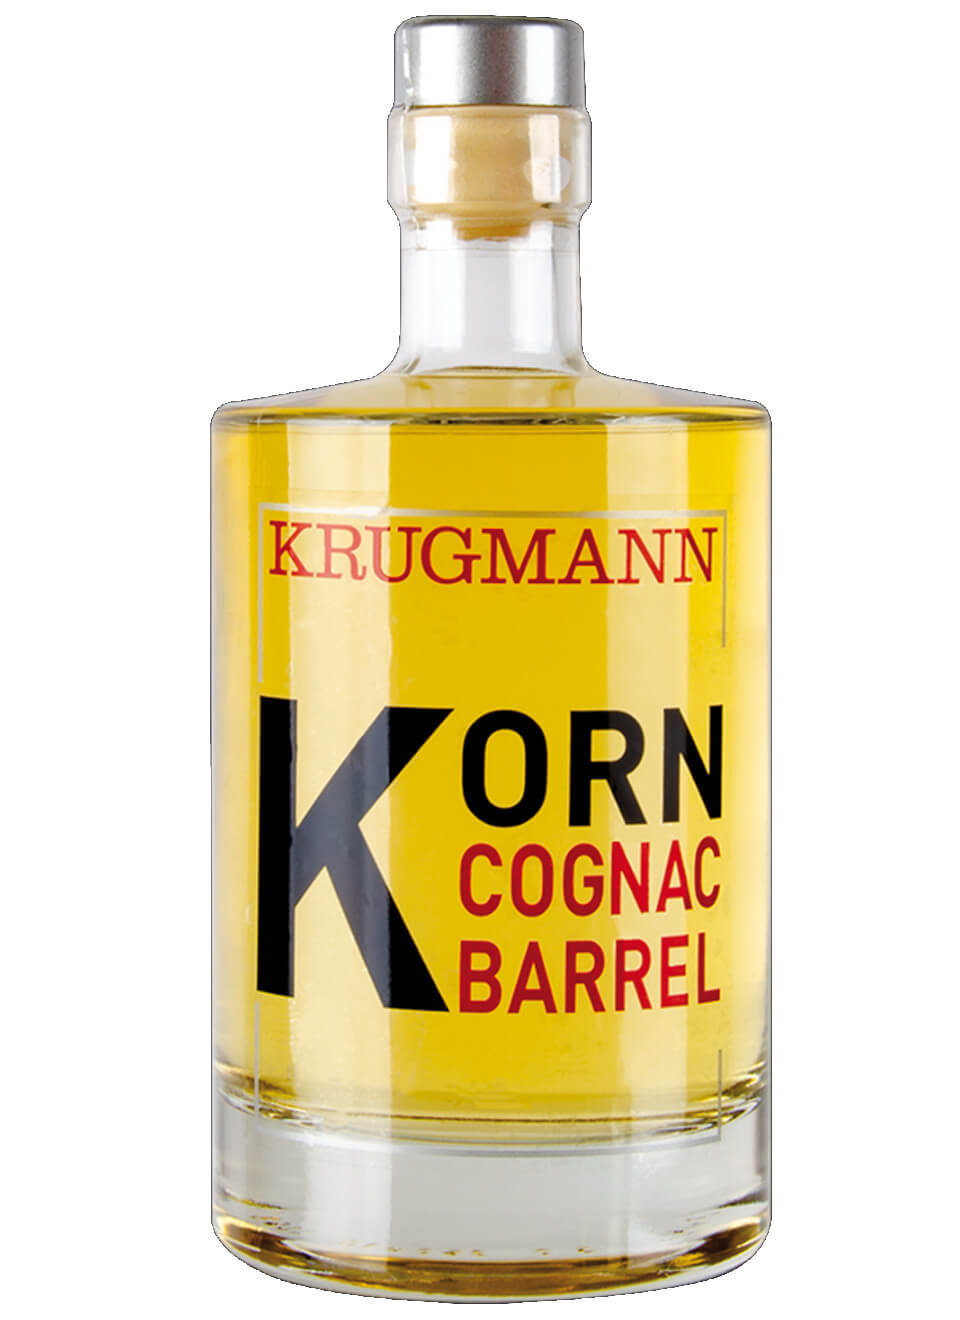 Krugmann Korn Cognac Barrel 0,5 L